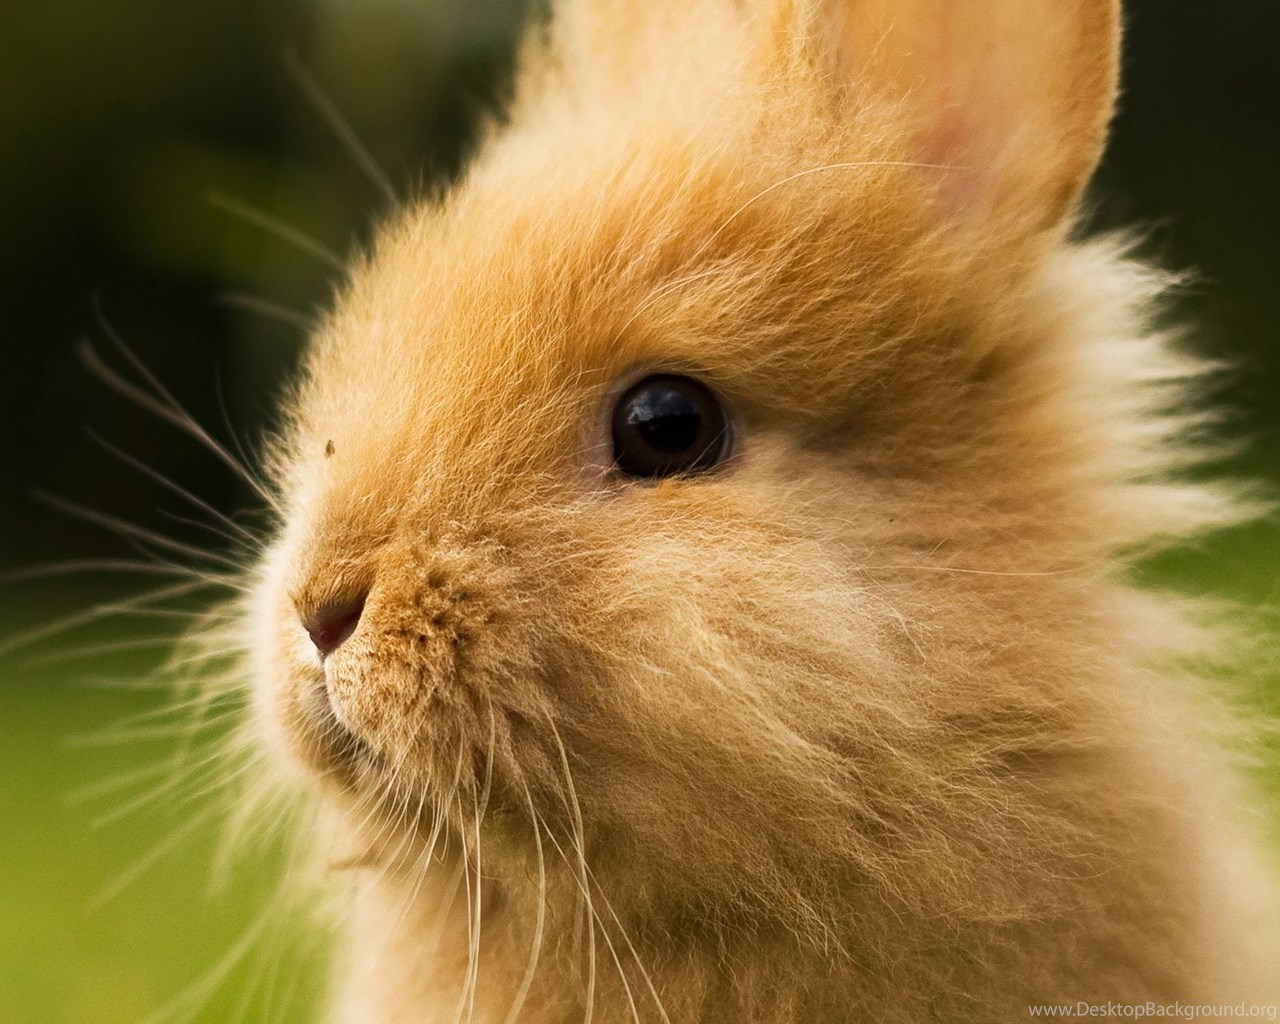 Cute Fluffy Bunny Wallpaper Desktop Background